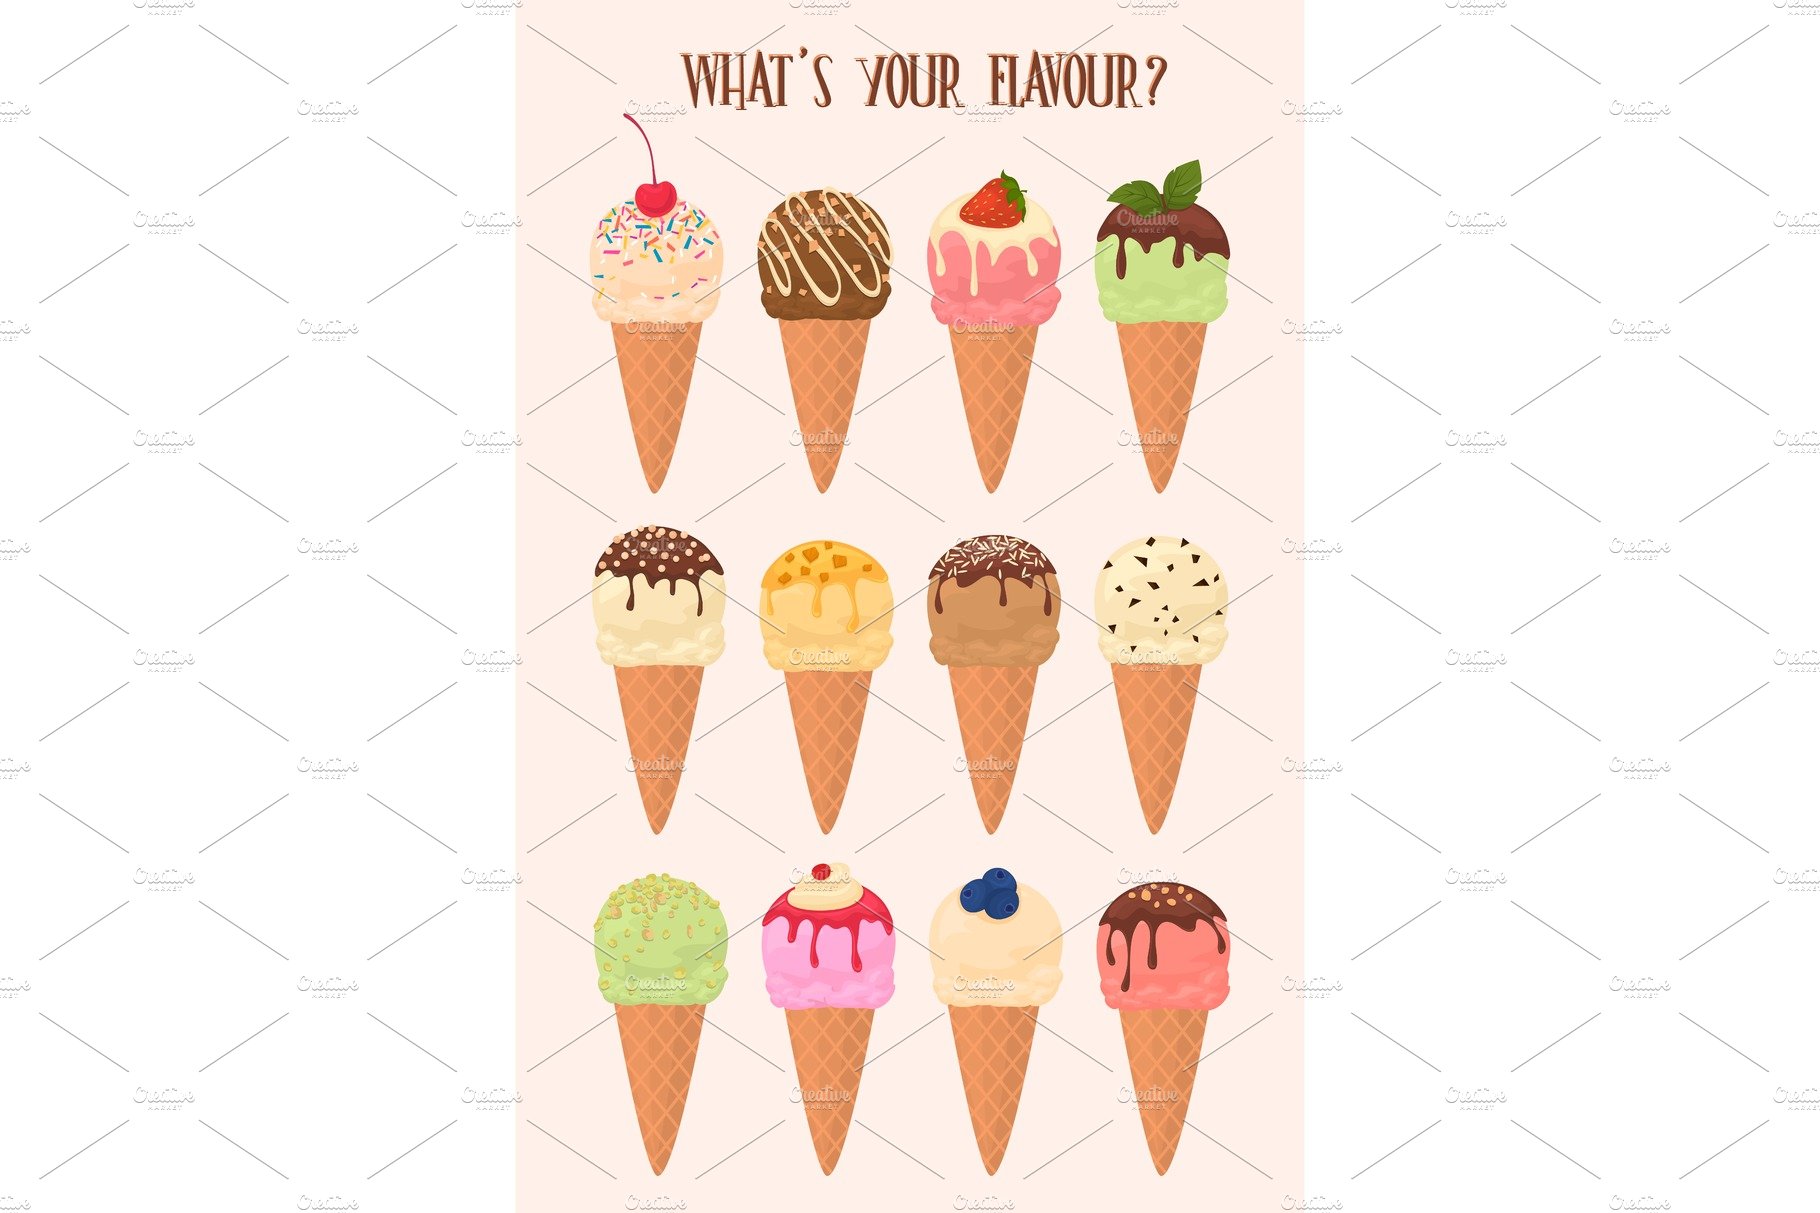 Ice cream cone collection cover image.